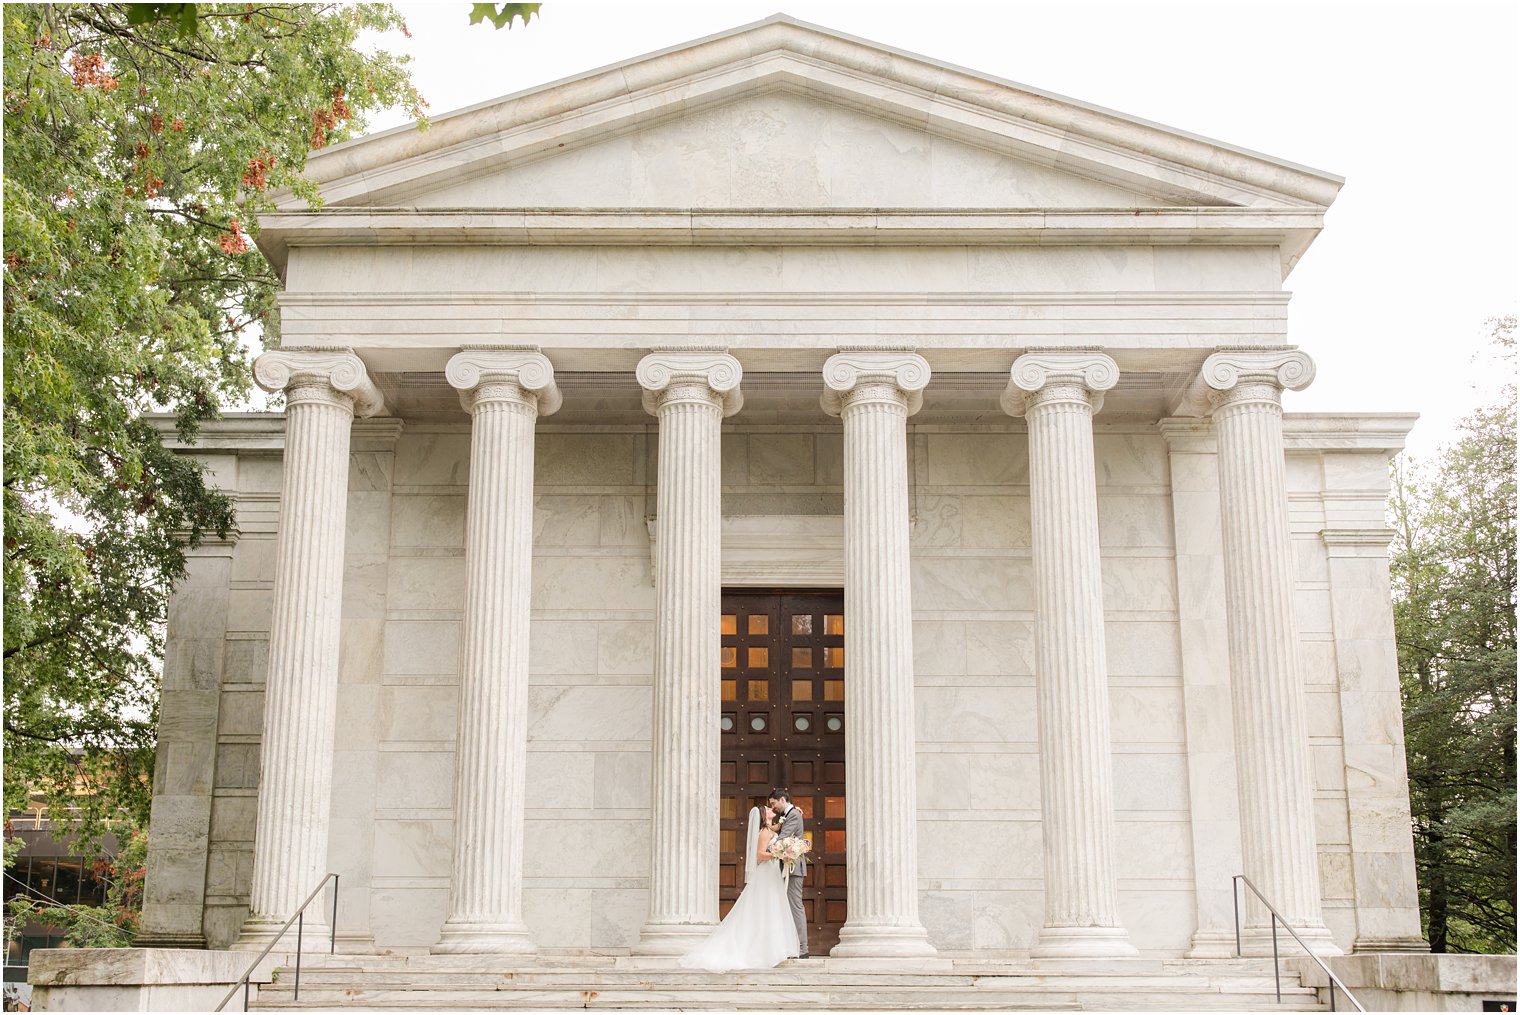 newlyweds pose on steps of building at Princeton University